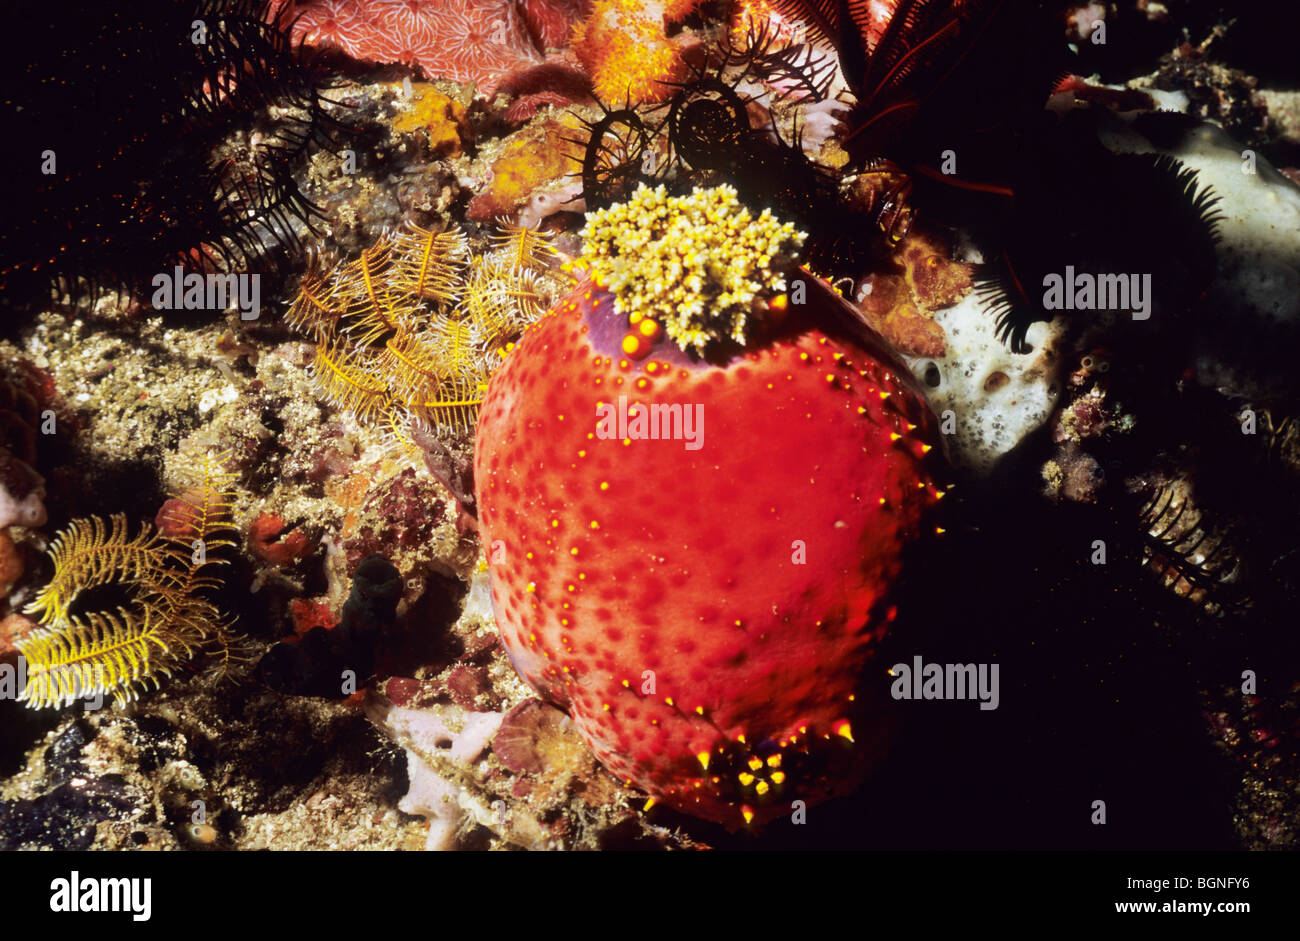 Sea Apple. Pseudocolochirus violaceus. Underwater marine life. Flores Sea. Komodo. Indonesia. Stock Photo